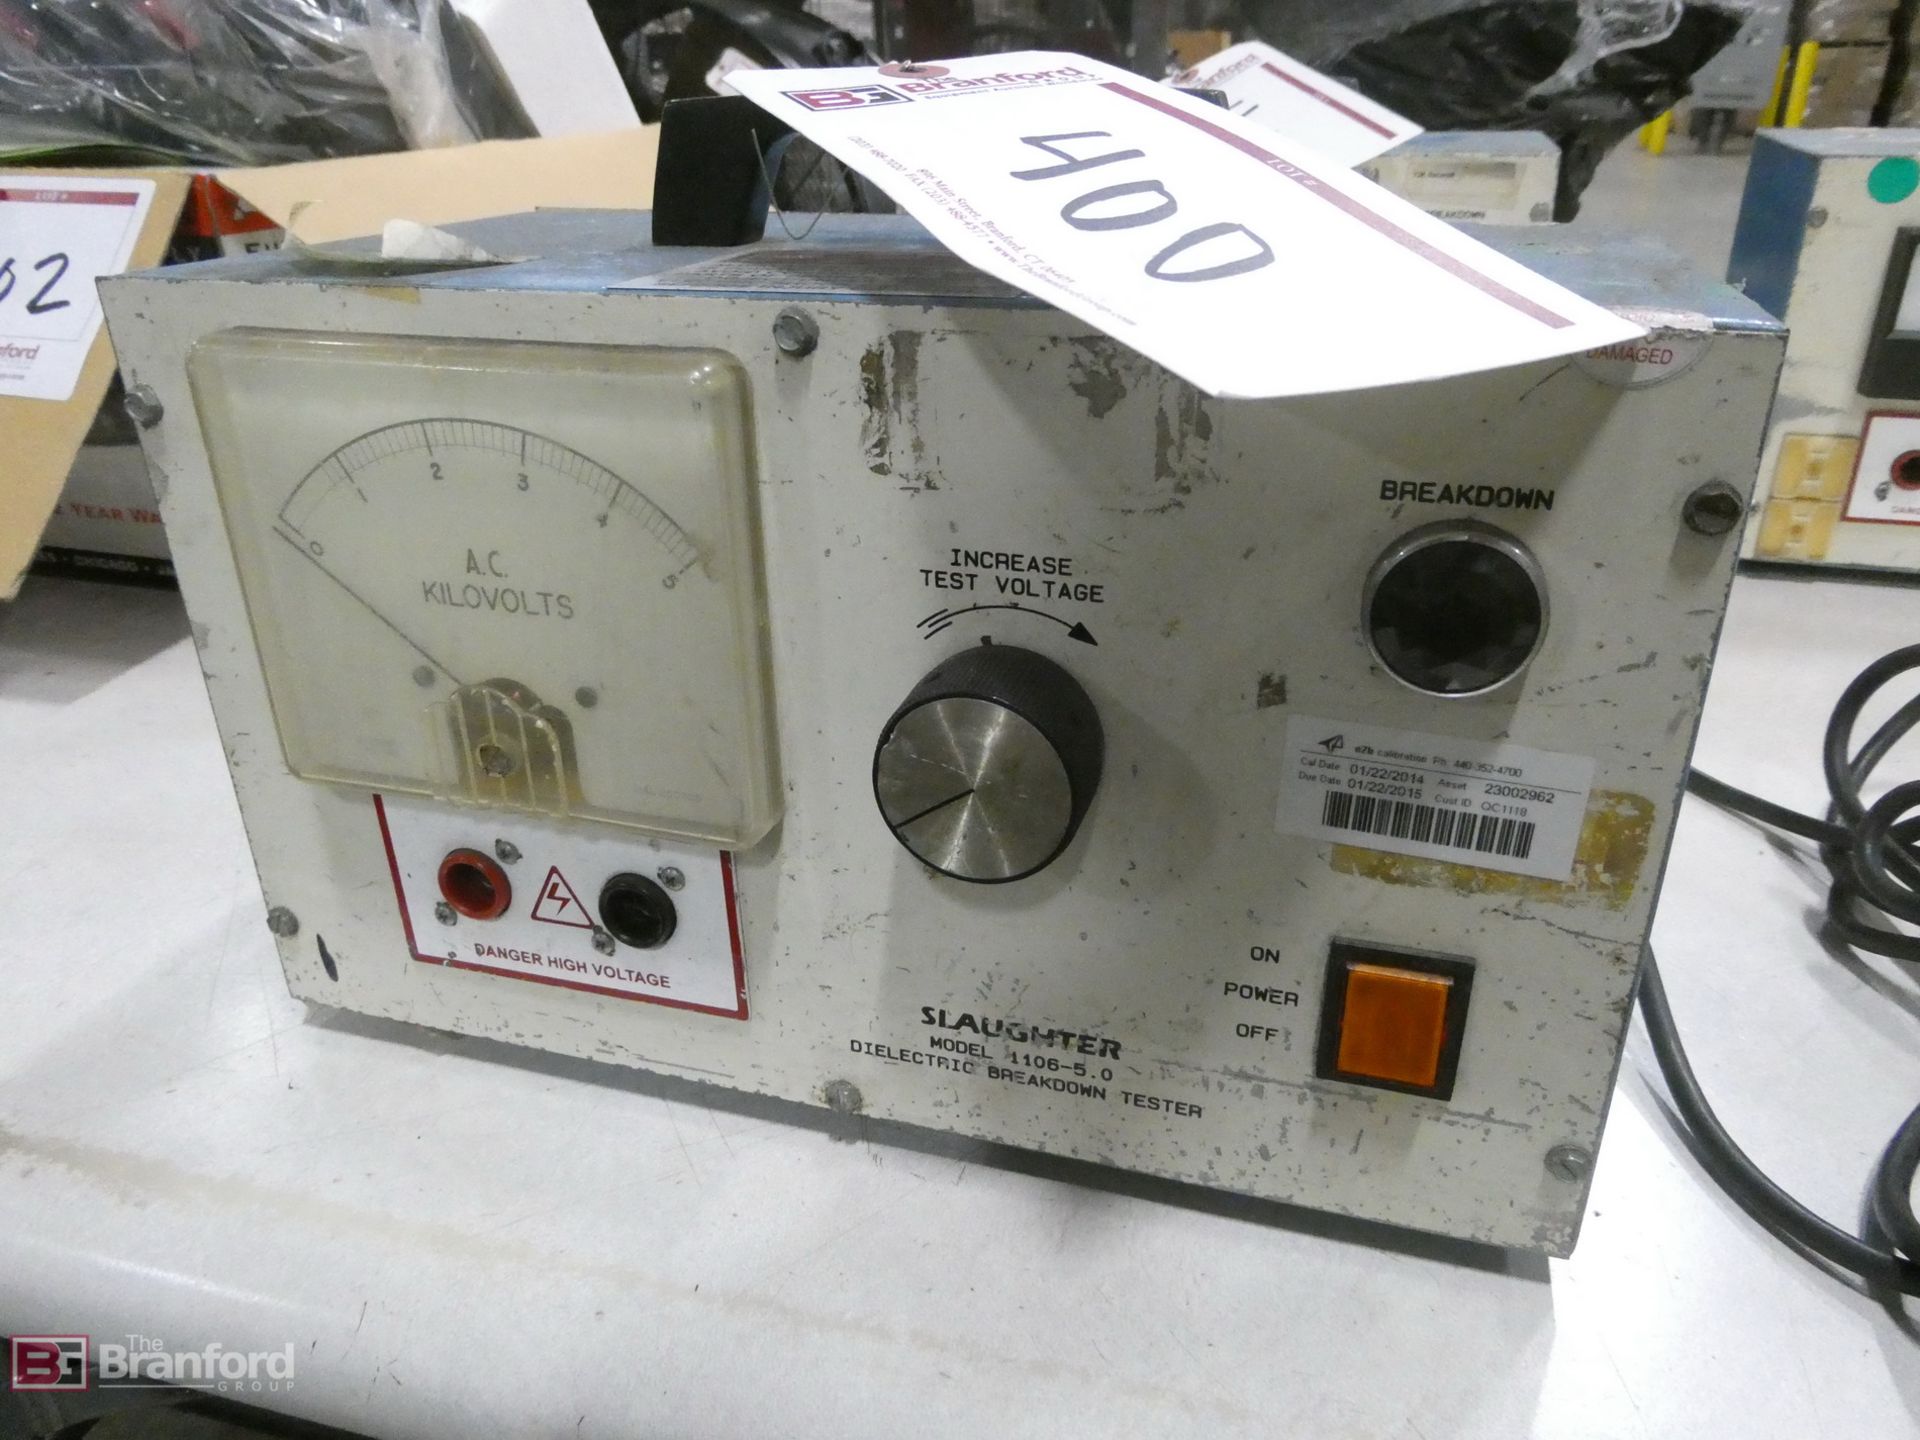 (2) Slaughter Model 1108-5.0, Dielectric Breakdown Testers - Image 3 of 4